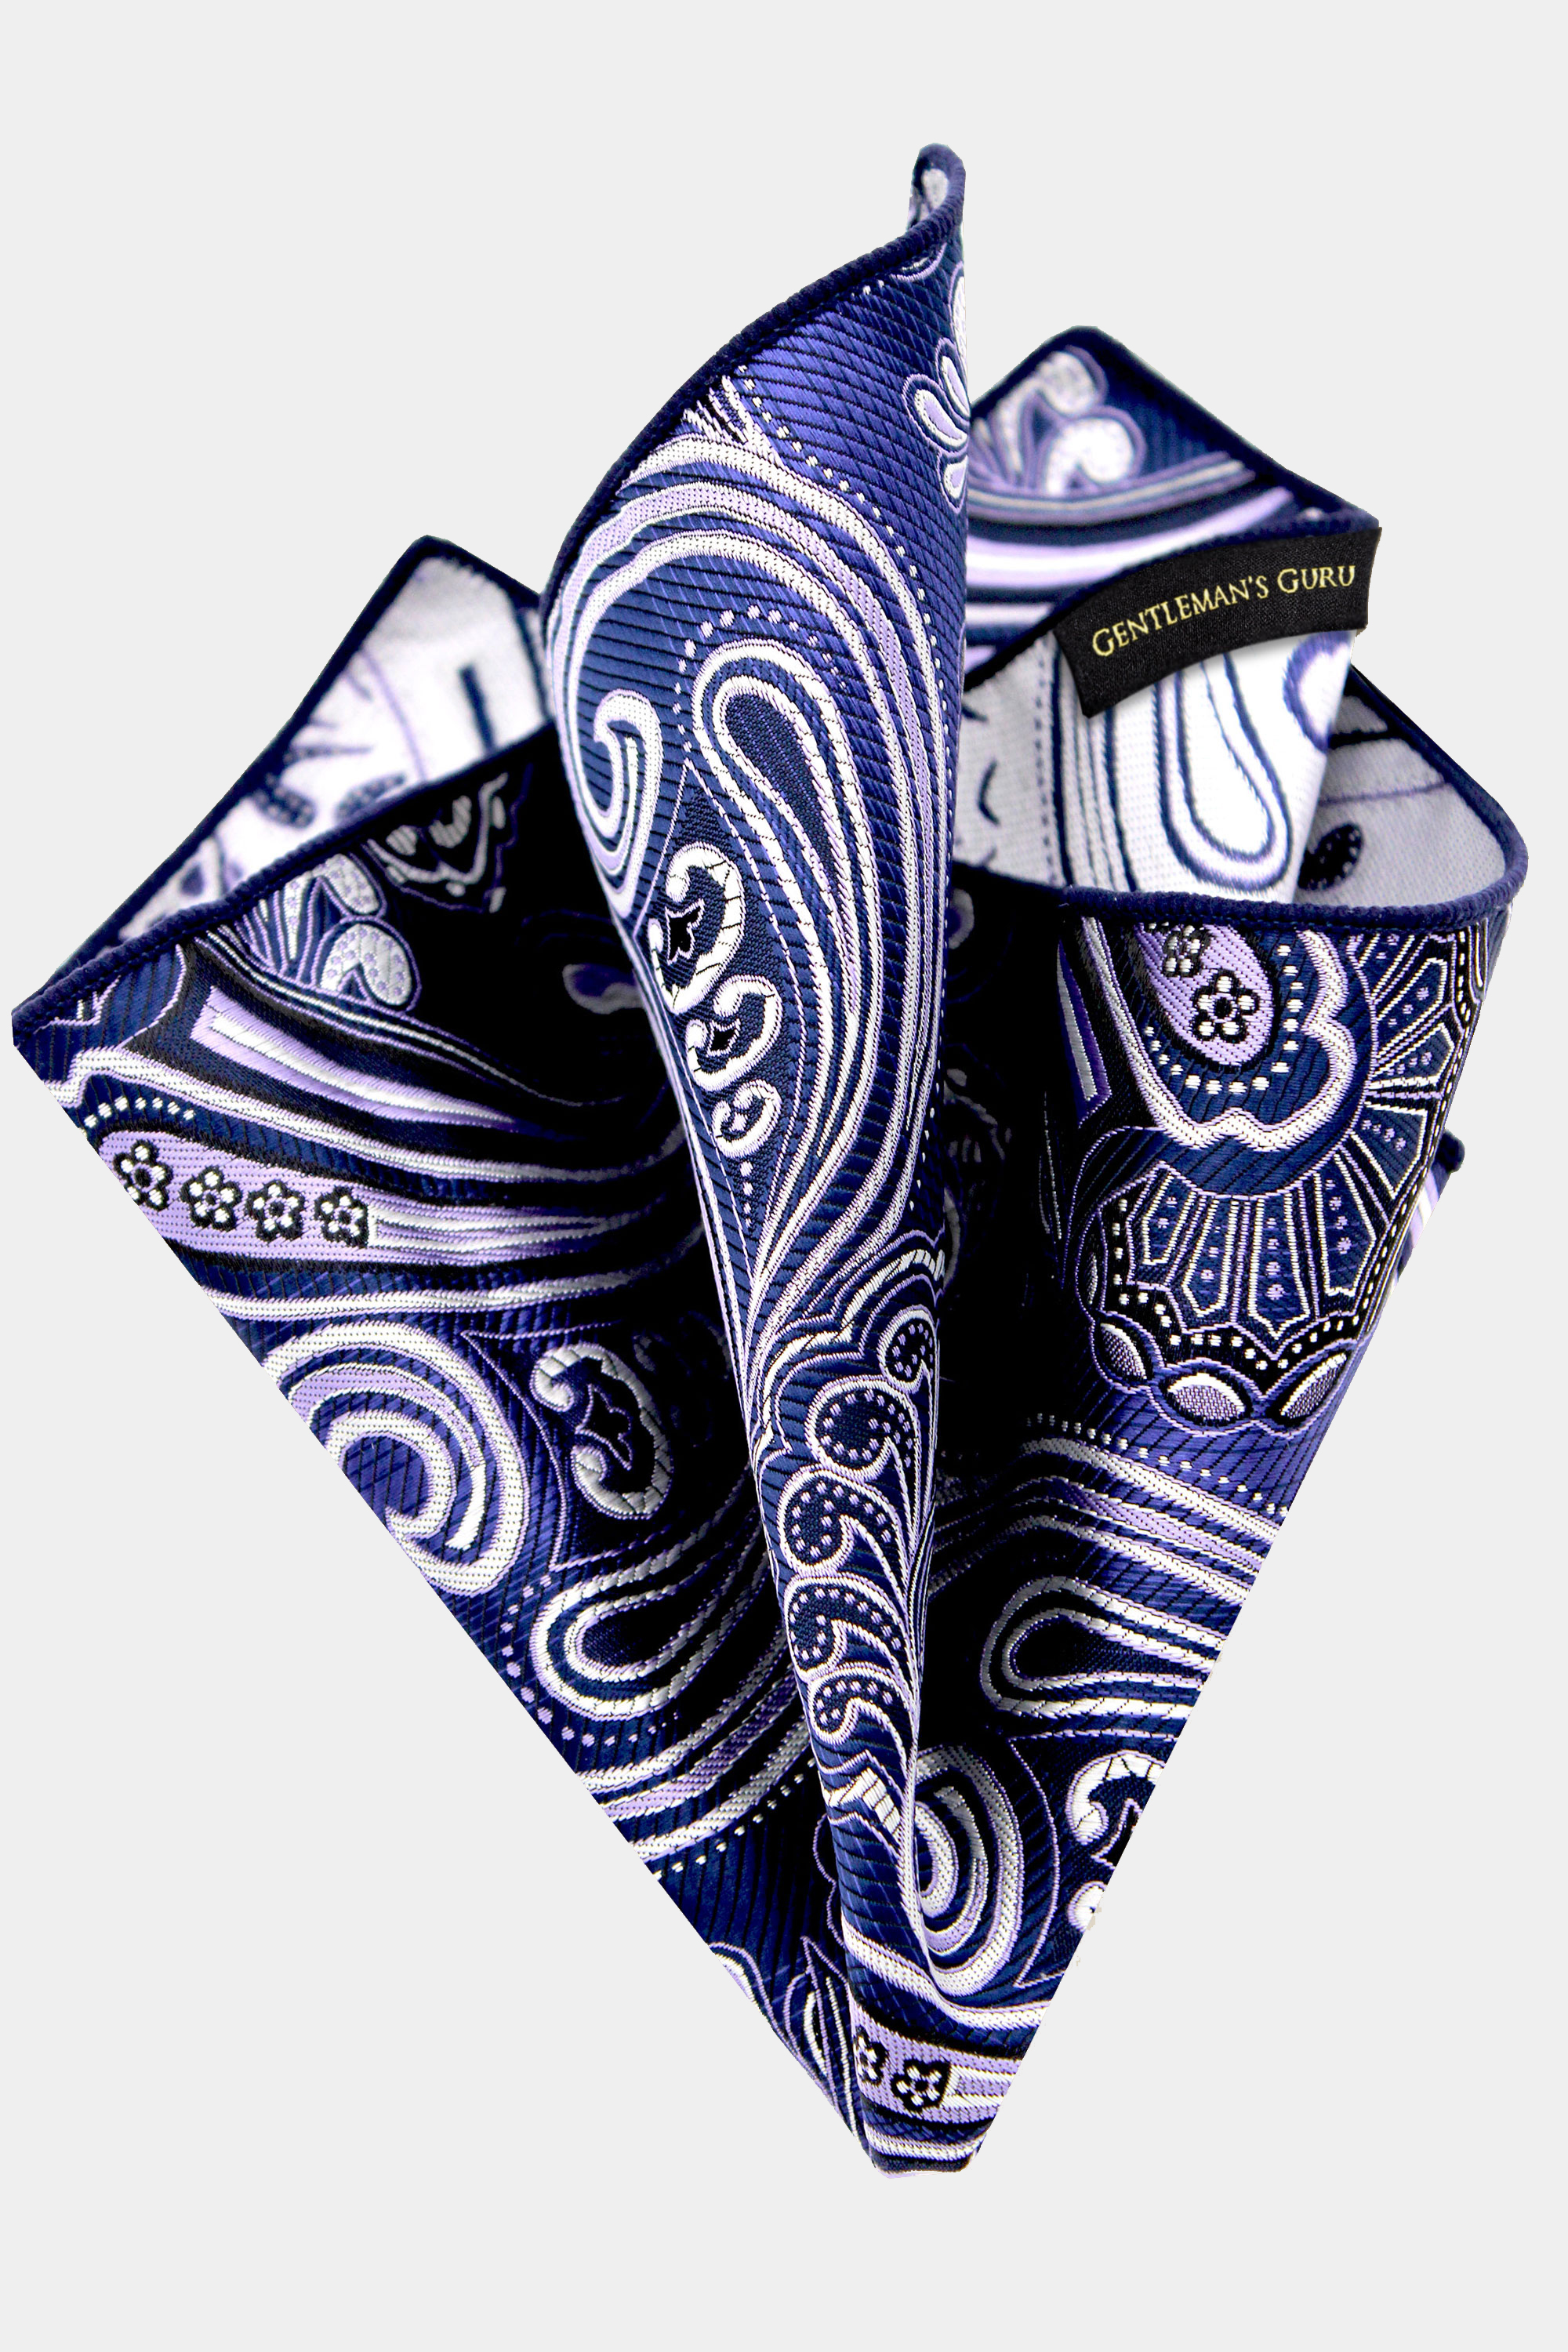 Cobalt-Blue-Paisley-POcket-Square-Handkerchief-from-Gentlemansguru.com_